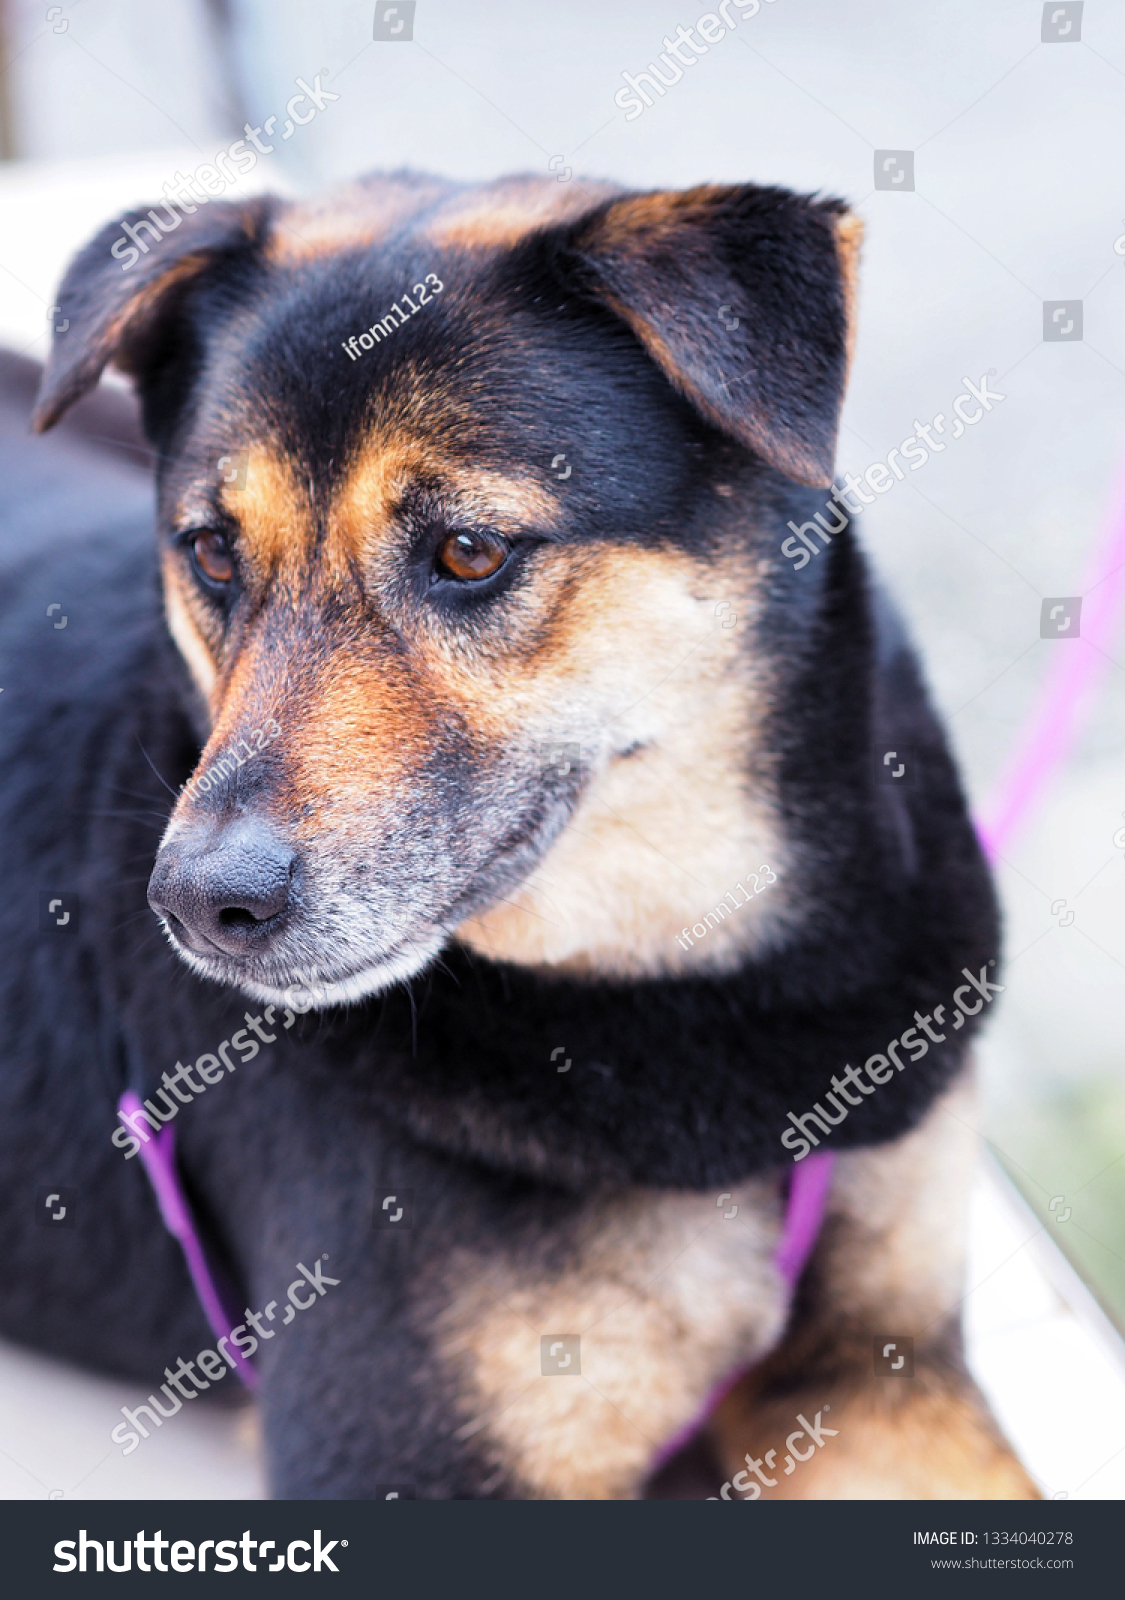 Cute Black Brown Huntaway Dog Laying Animals Wildlife Stock Image 1334040278